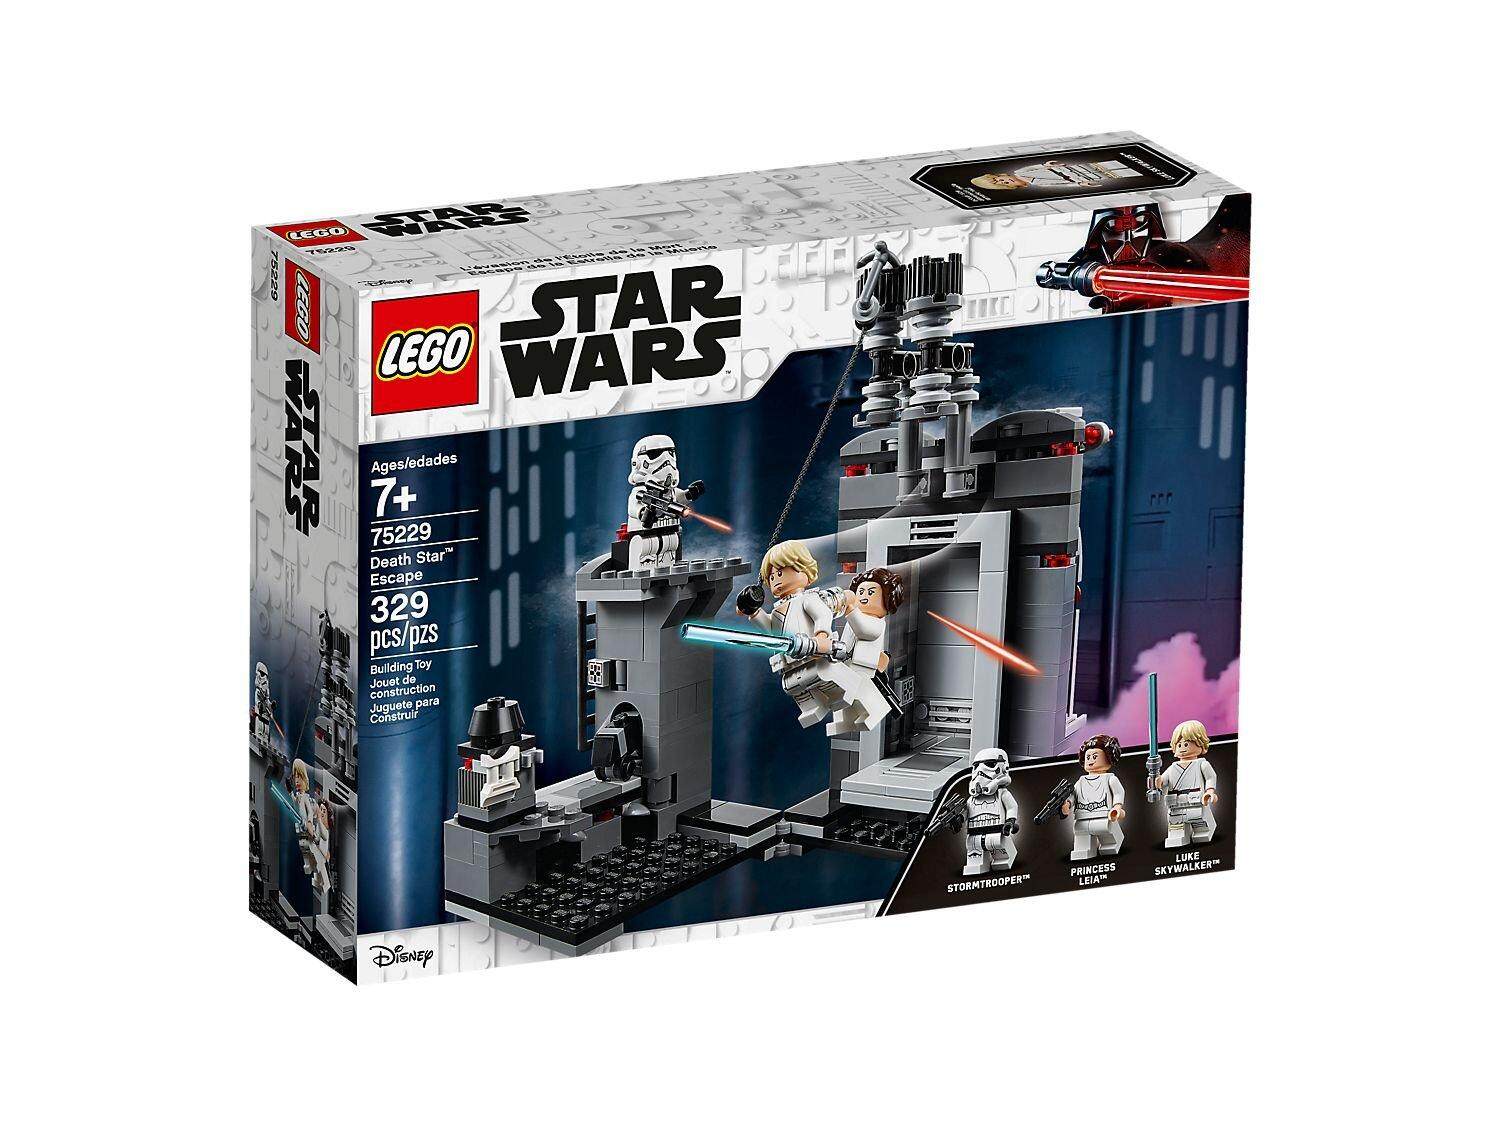 [100% chính hãng] LEGO 75229 Star Wars Death Star Escape 329pcs 7+Đồ Chơi Lắp Ráp lego